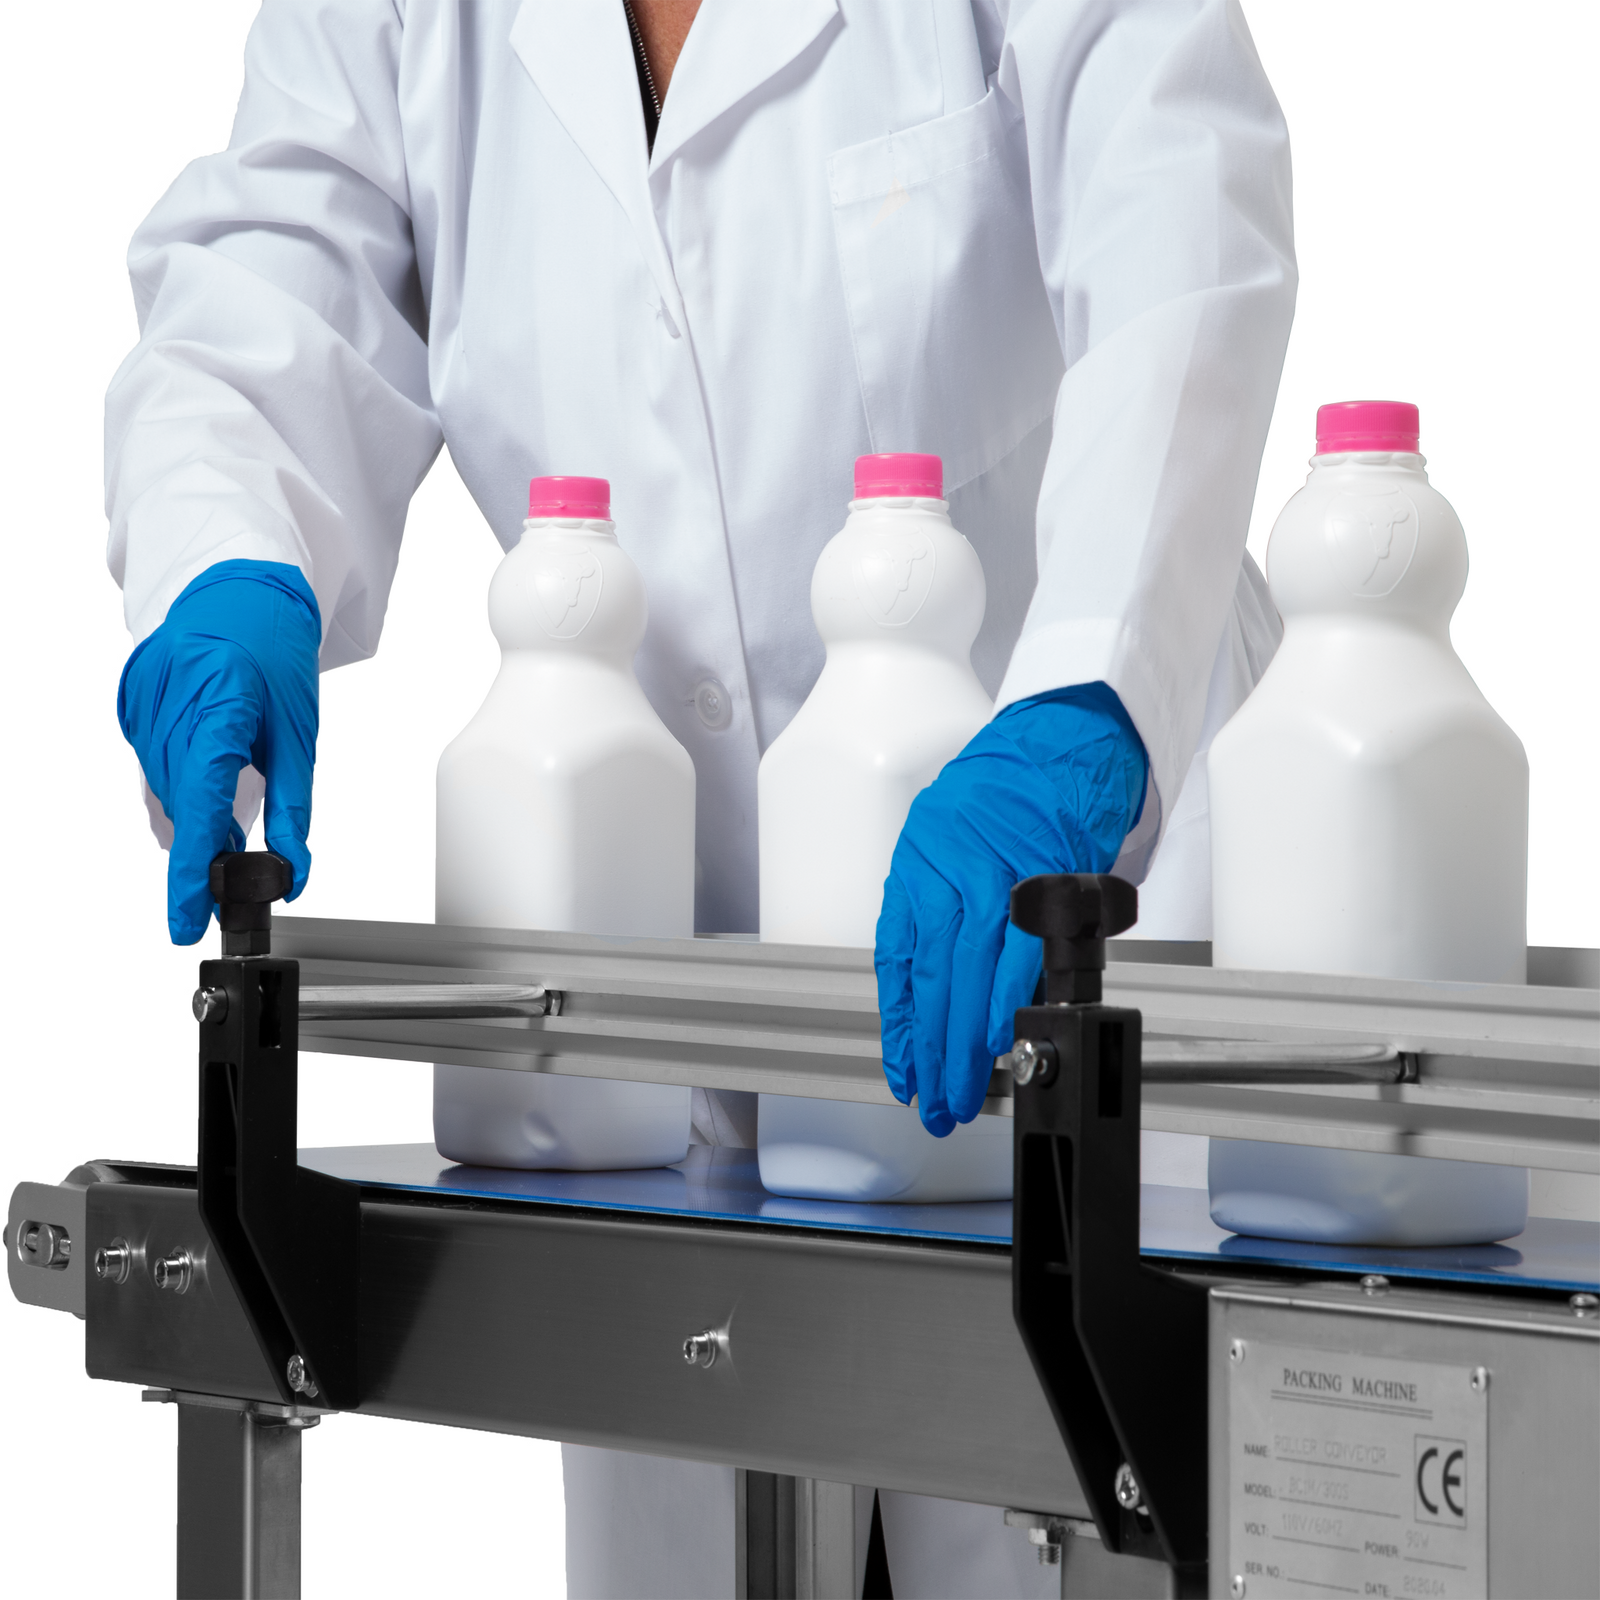 operator wearing white lab coat and blue gloves adjusting side rail on conveyor belt with white milk bottles